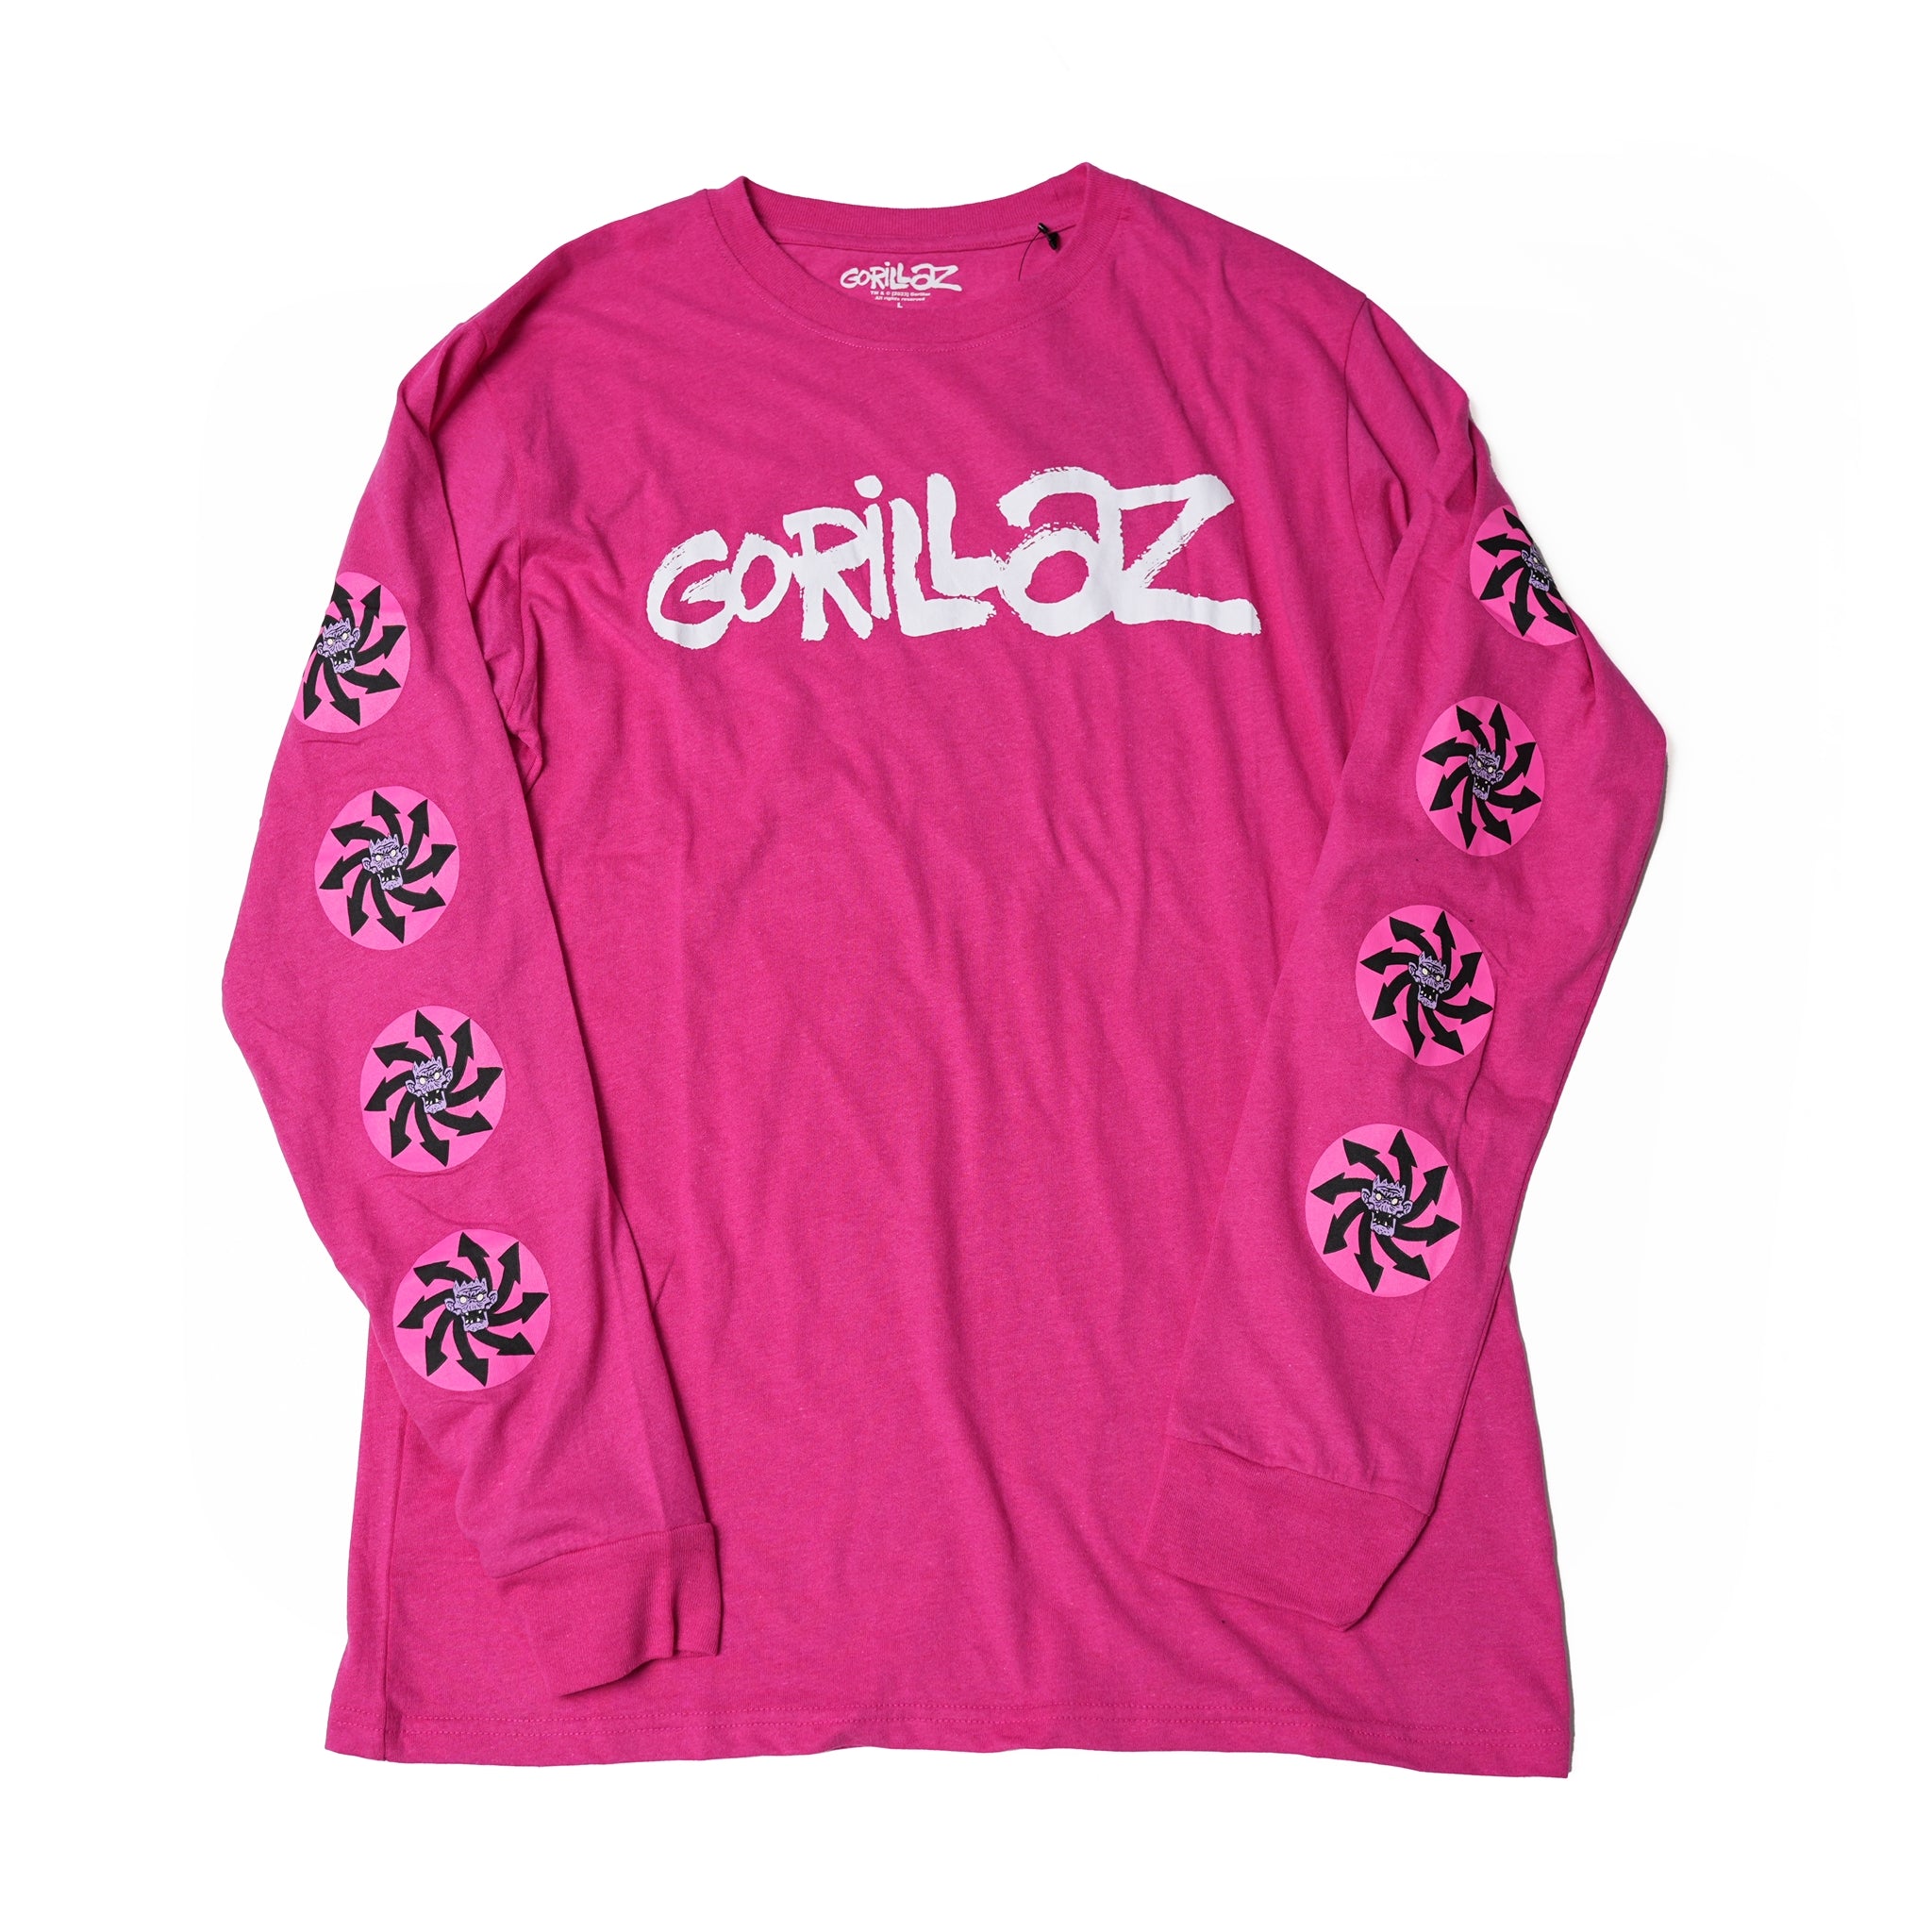 Name:Gorillaz_Repeat Pazuzu Spiral【ROCK OFF】【ネコポス選択可能】